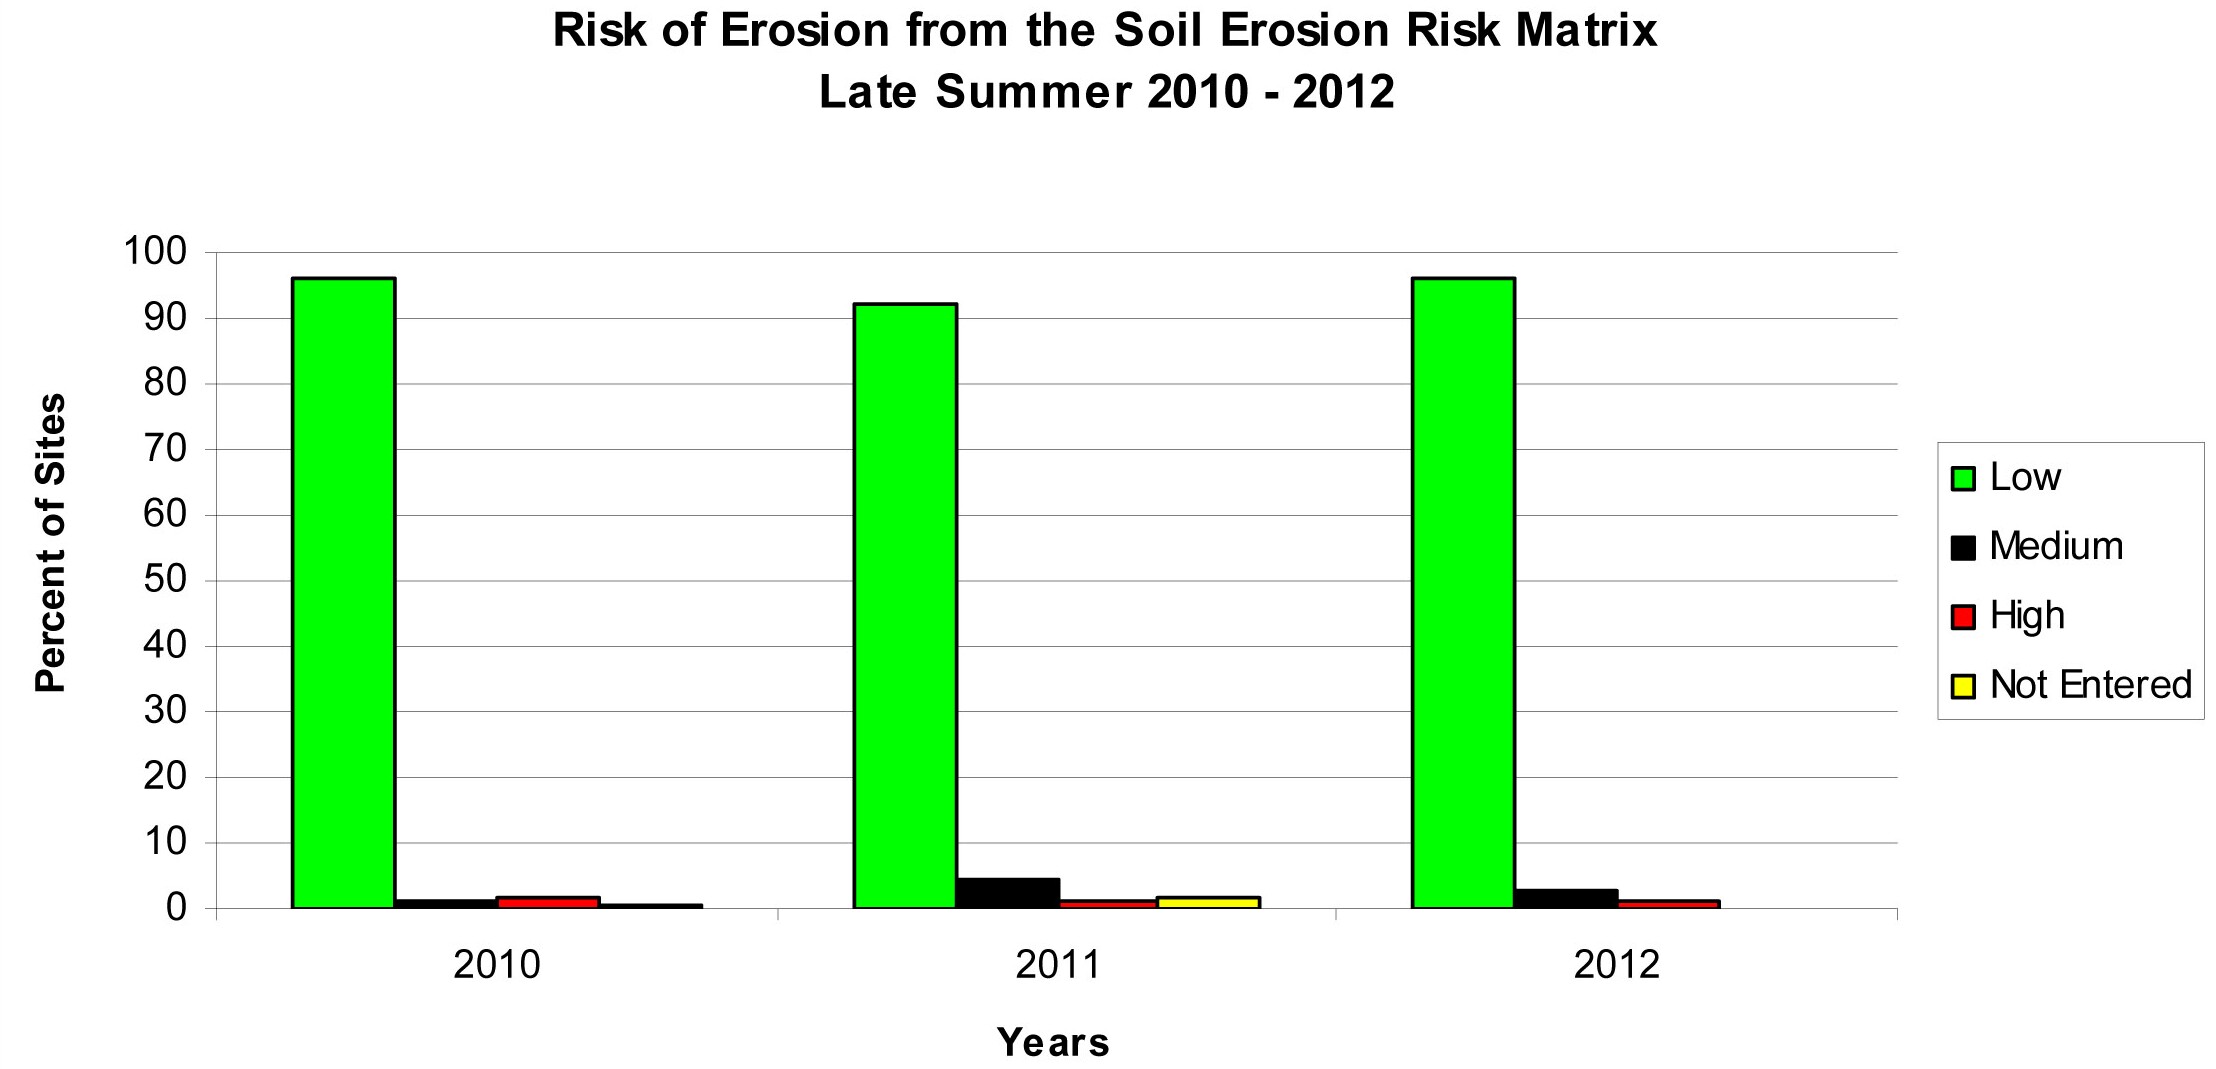 Mallee soil erosion and land management survey figure 4